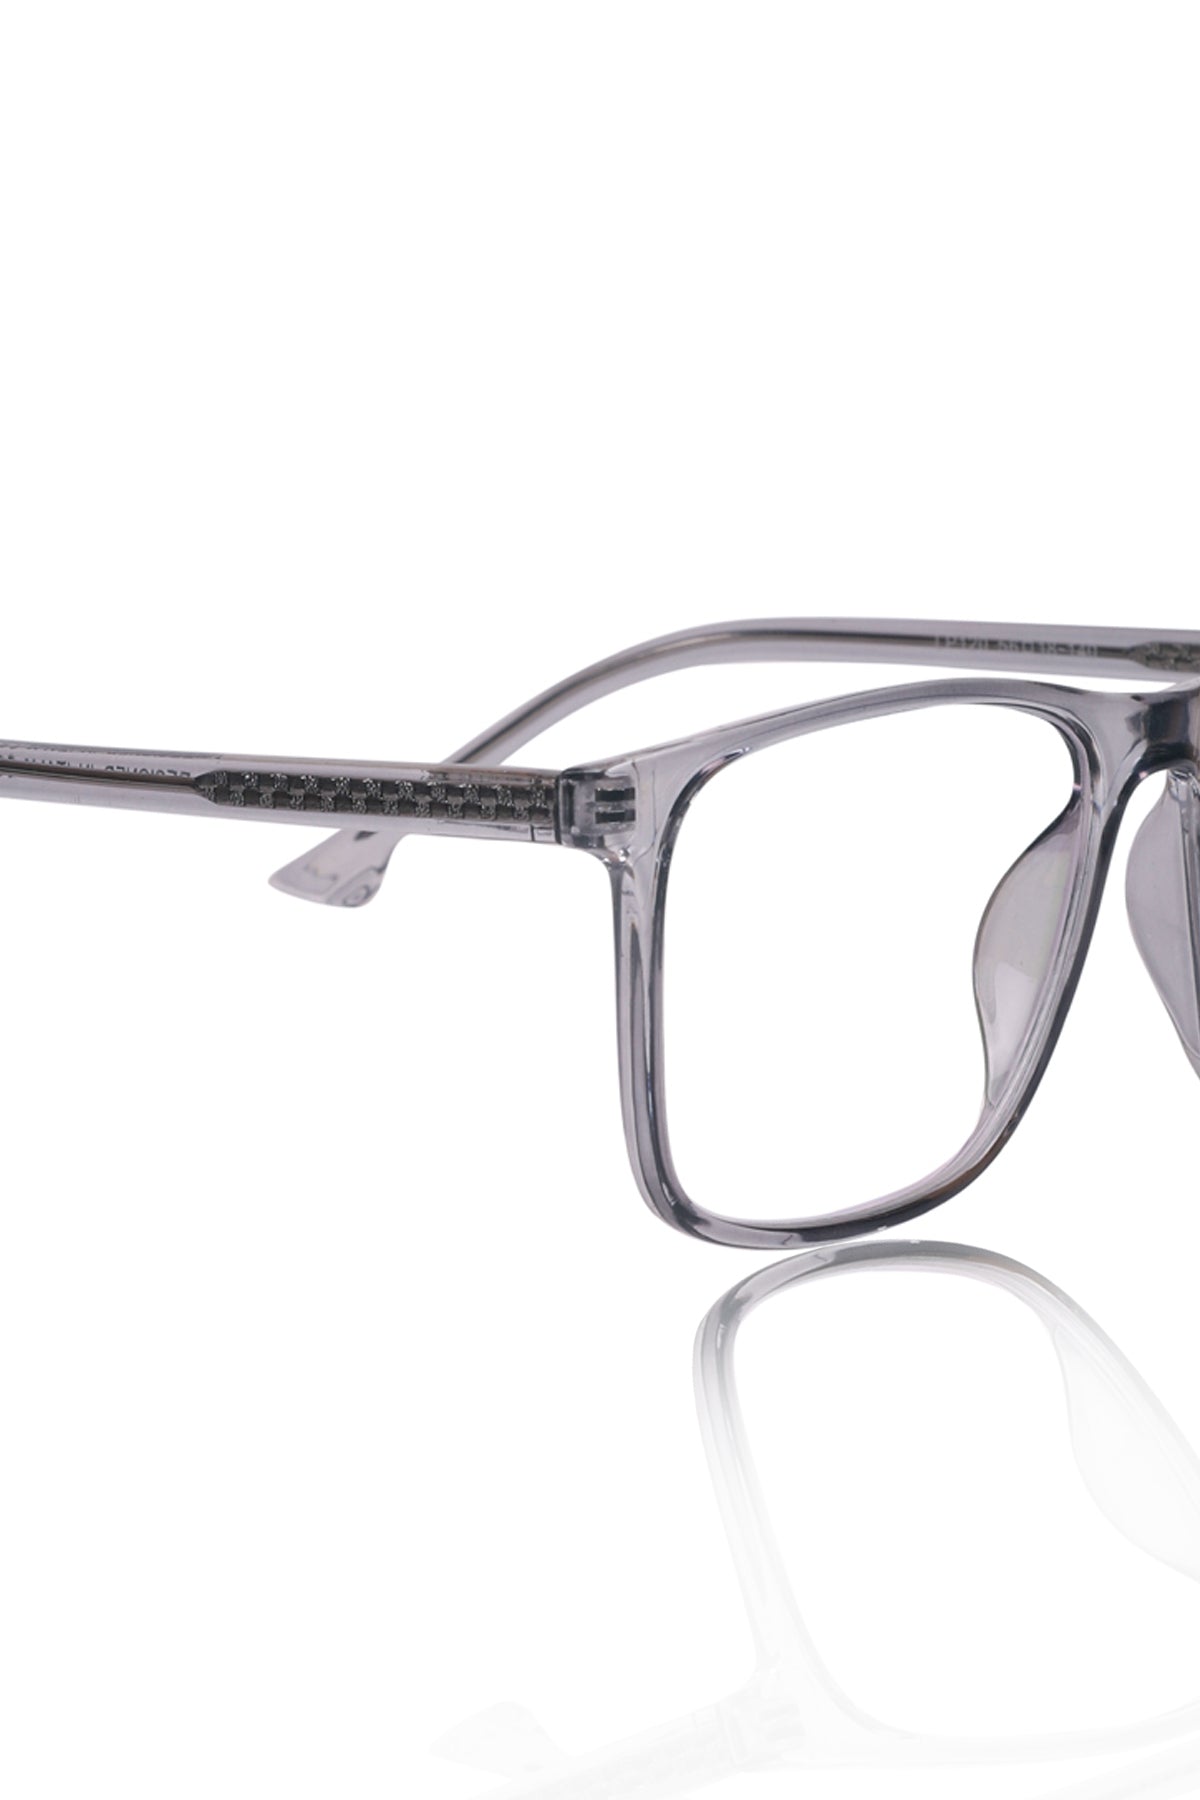 Jodykoes® Premium Series Pure Acetate Sheet Rectangle Eyewear Frame | Modern Fashionable Trending Spectacle Eyeglasses For Men and Women (Ash Grey) - Jodykoes ®